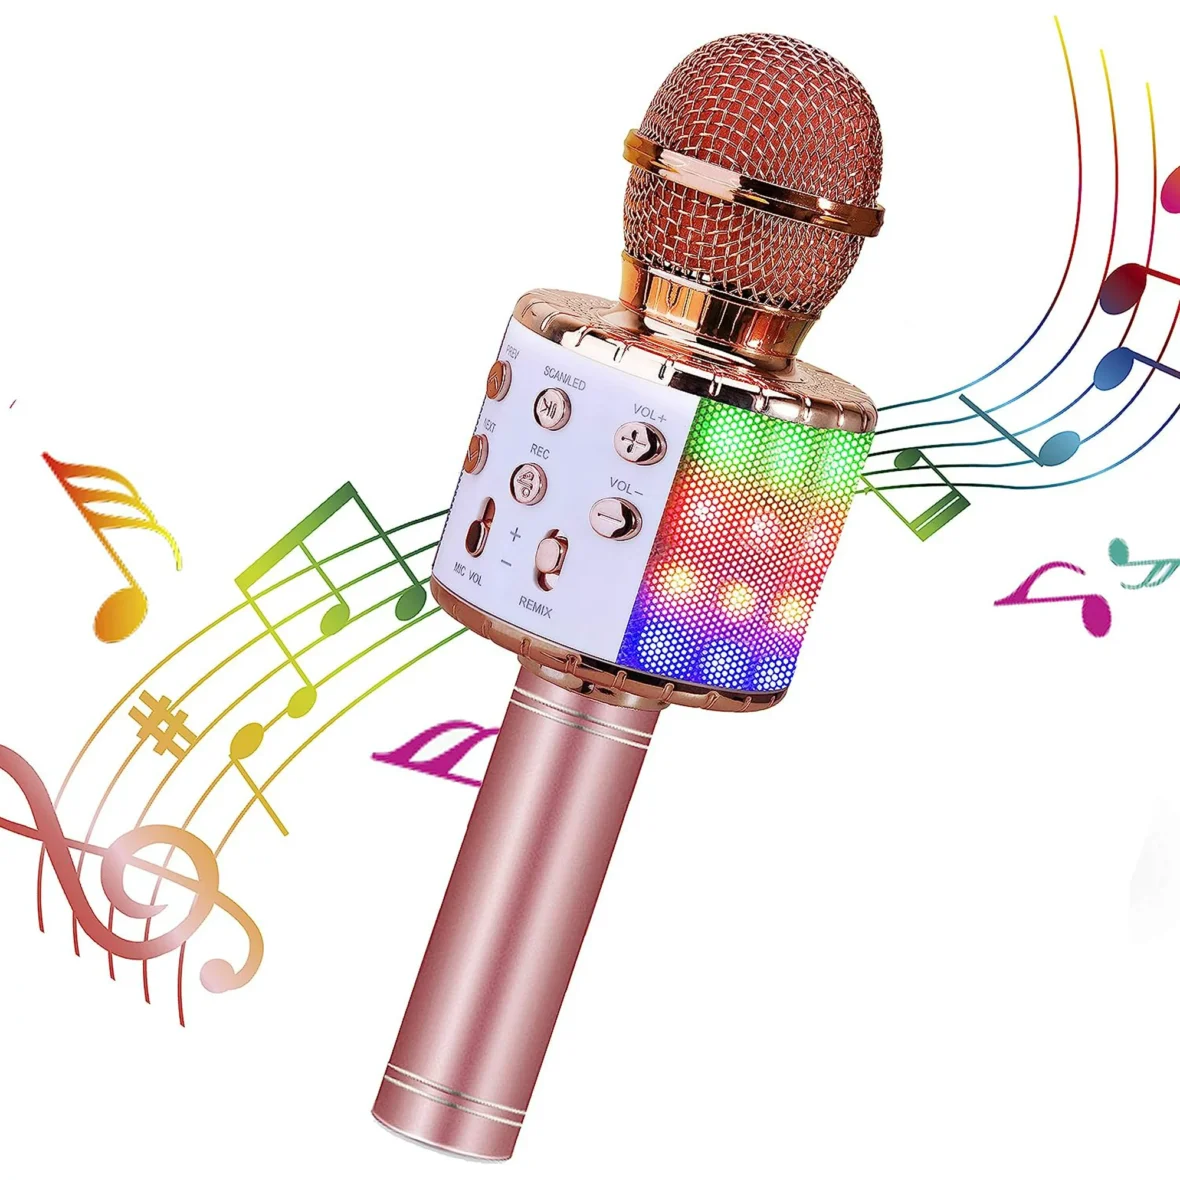 Music handheld KTV WS-858L Wireless Microphone HiFi speaker- Rose Gold